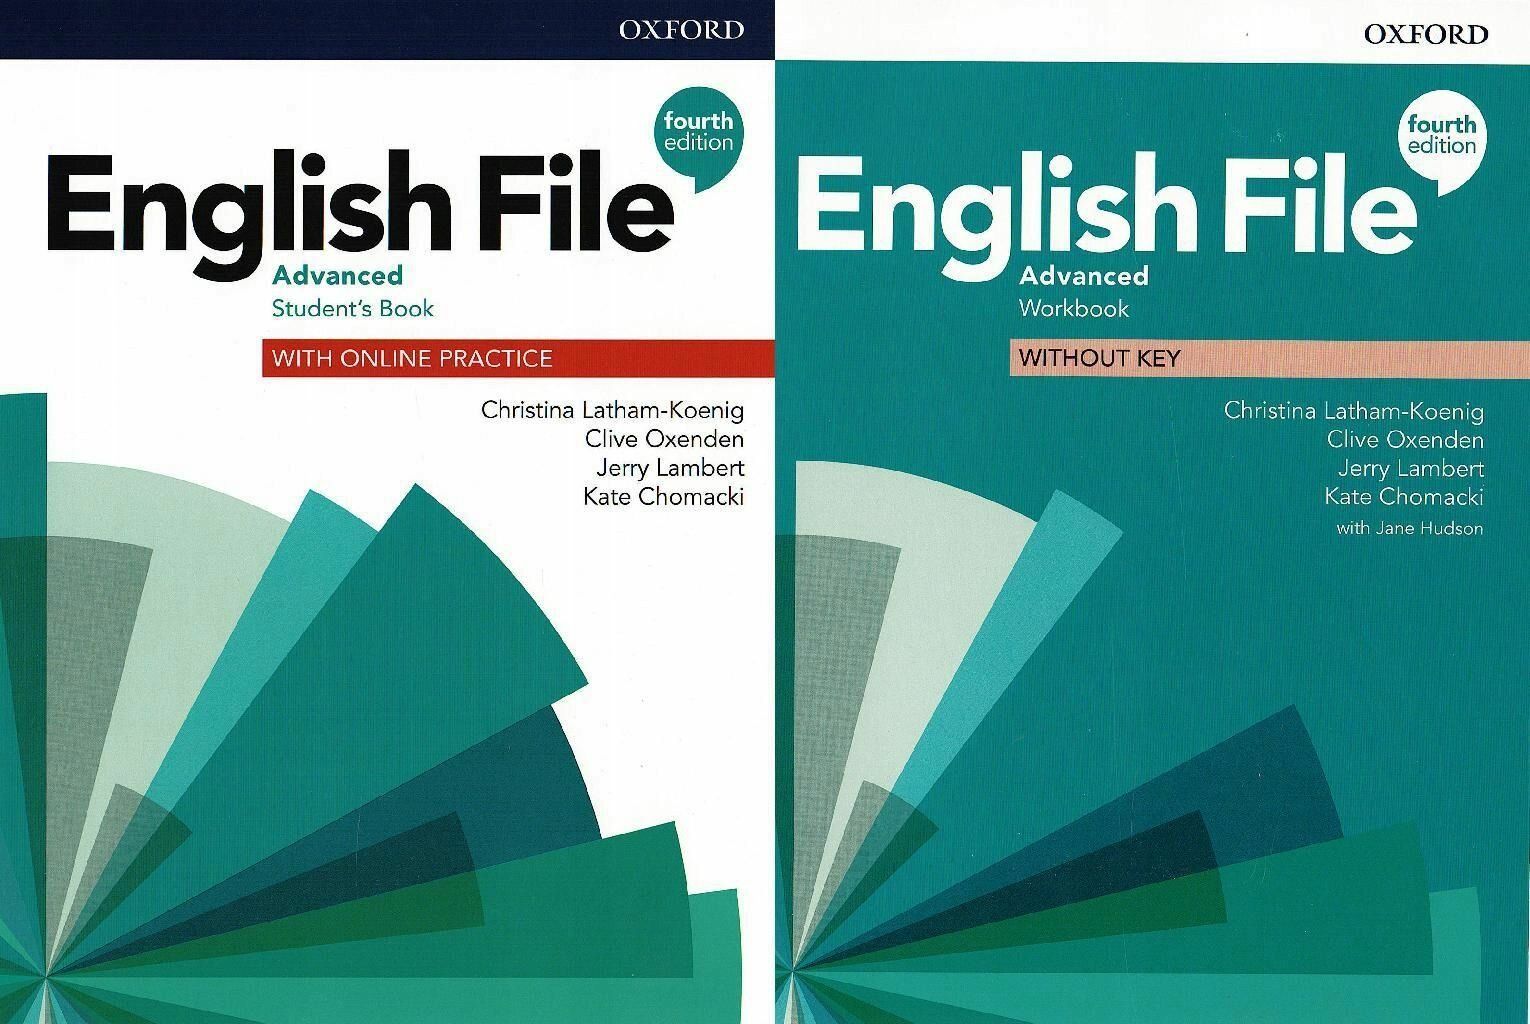 Oxford student s book. English file pre Intermediate 4th Edition. English file Advanced 4th Edition. English file Elementary 4th Edition уровень. Оксфорд 4 издание Intermediate.